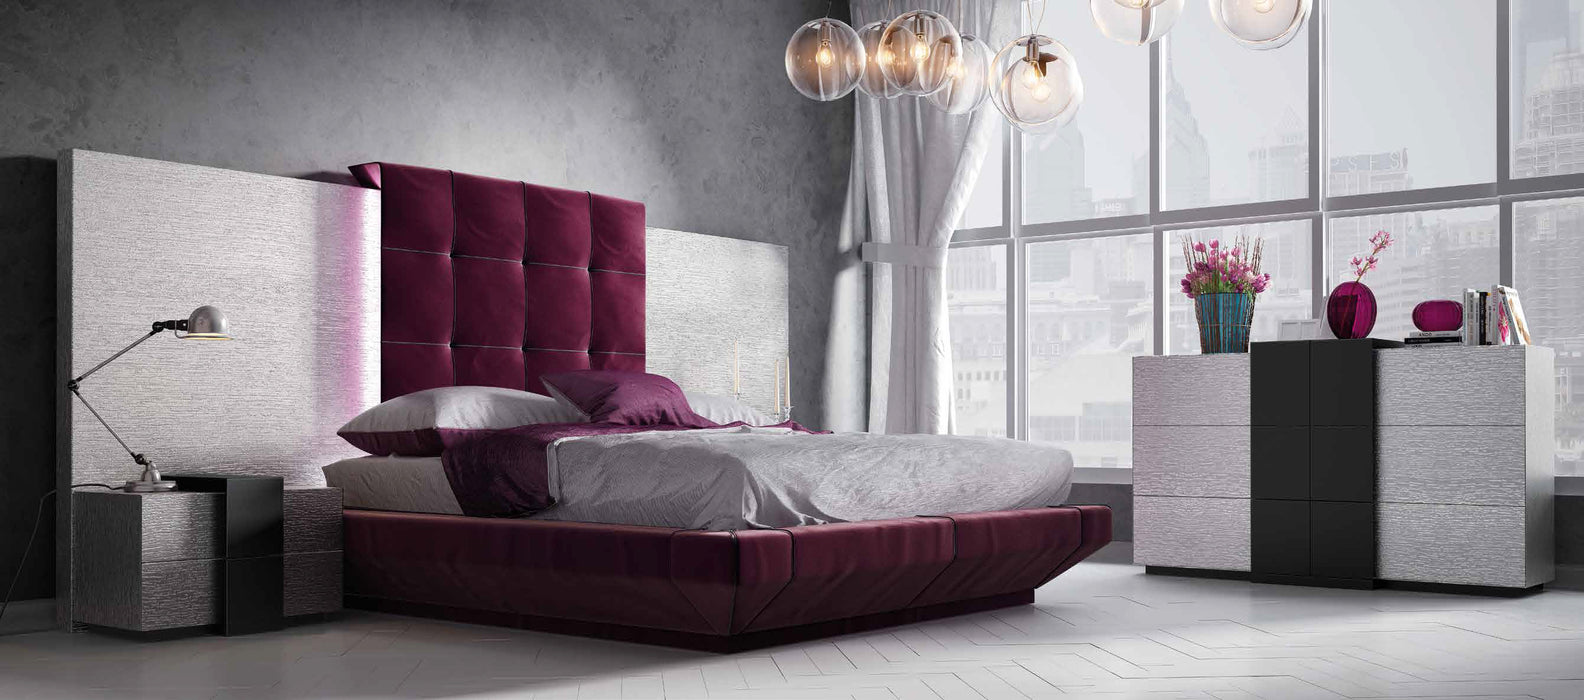 ESF Furniture - Franco Spain Dor 3 Piece Queen Bedroom Set - DOR08Q-3SET